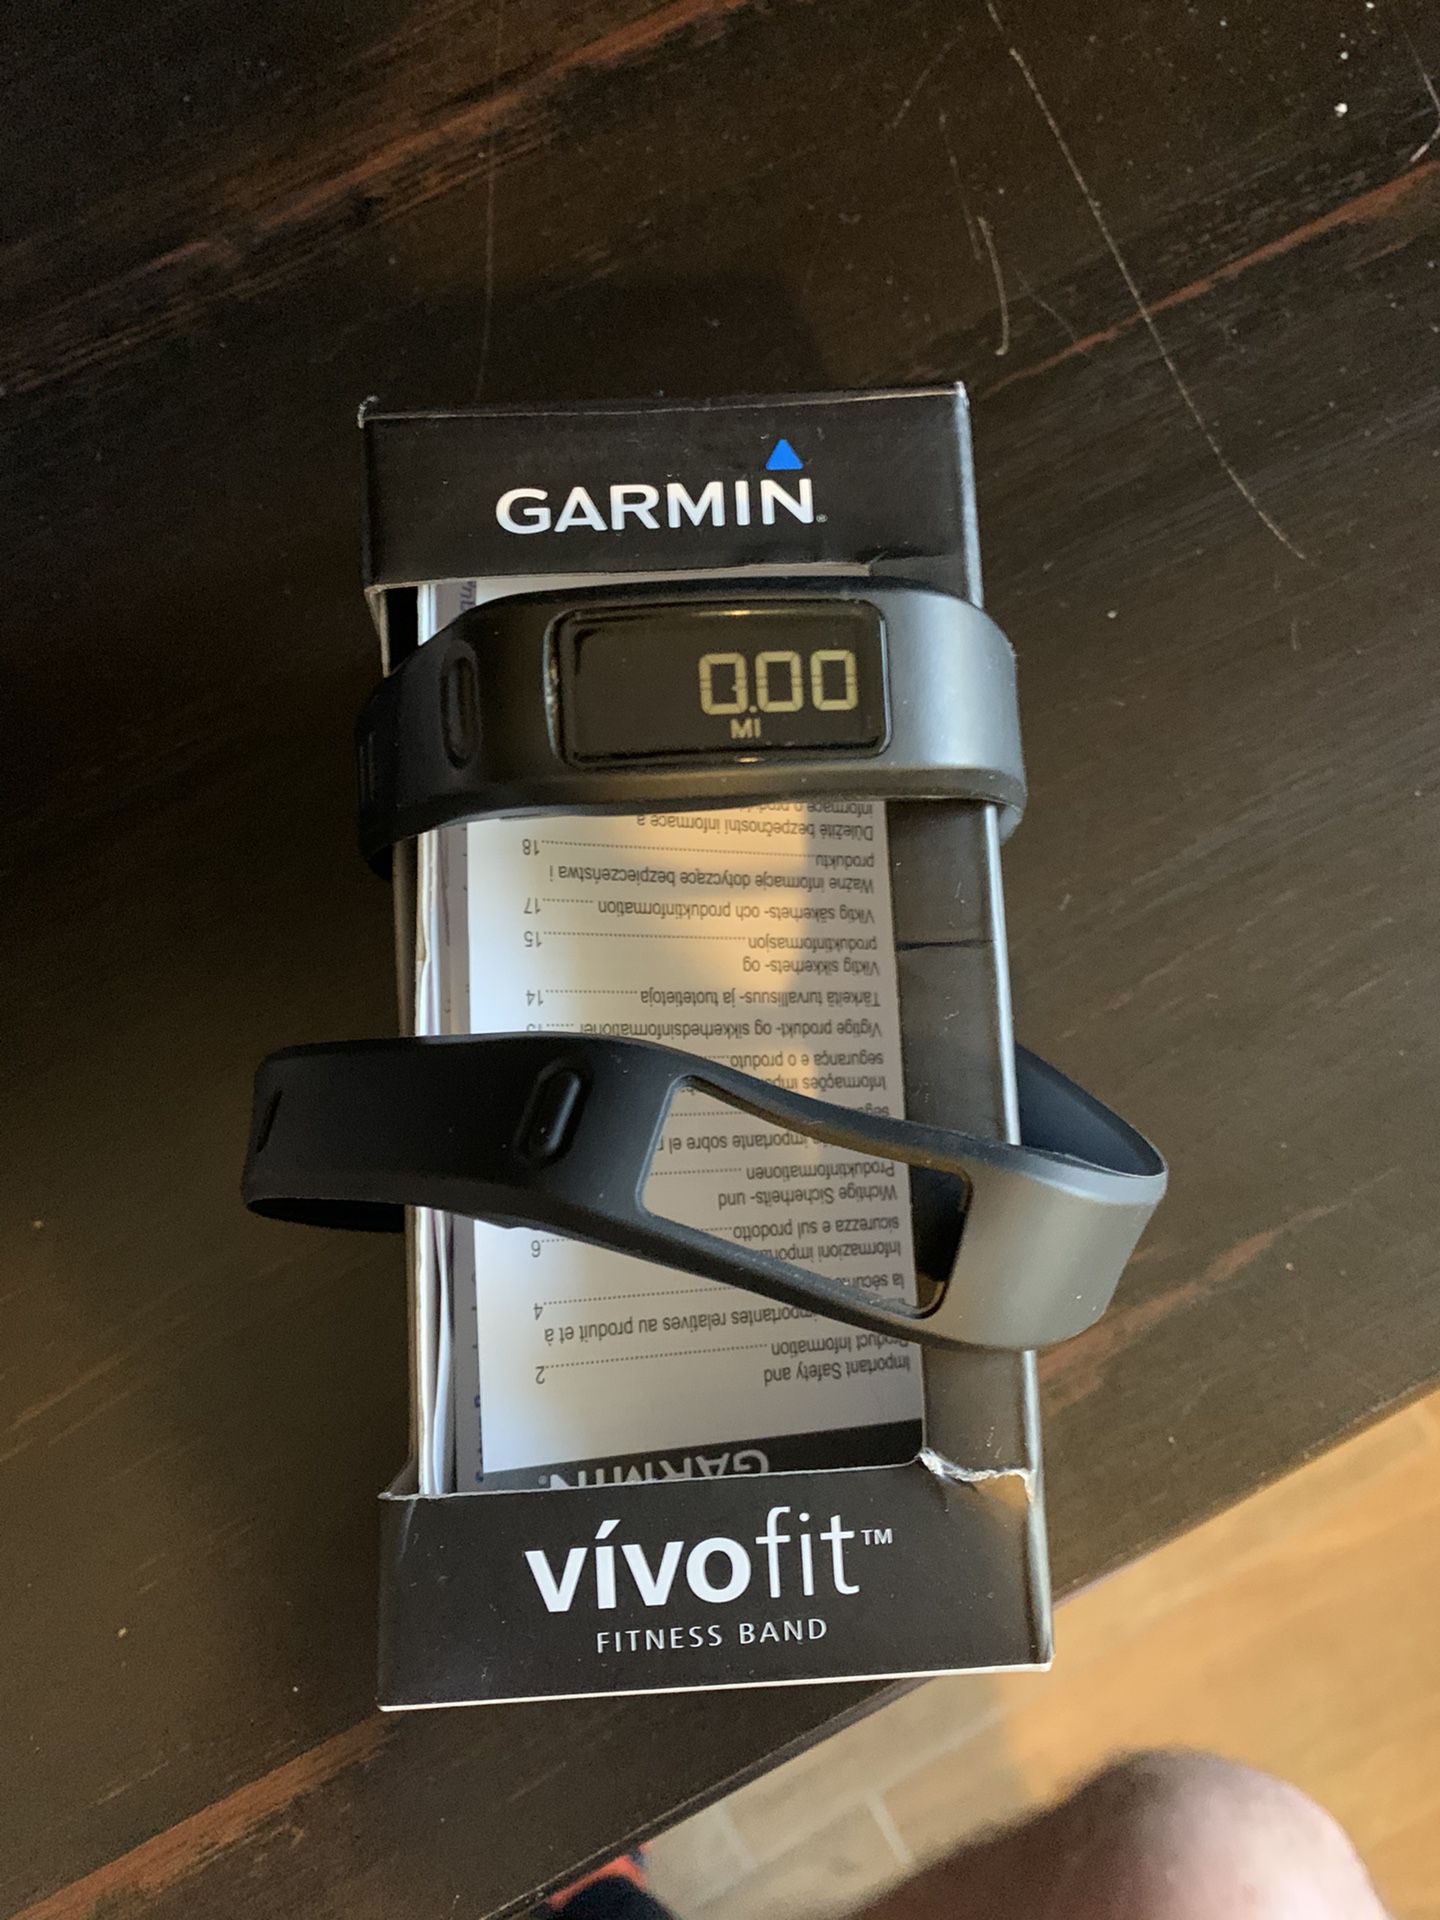 FitBit ViVOfit by Garmin